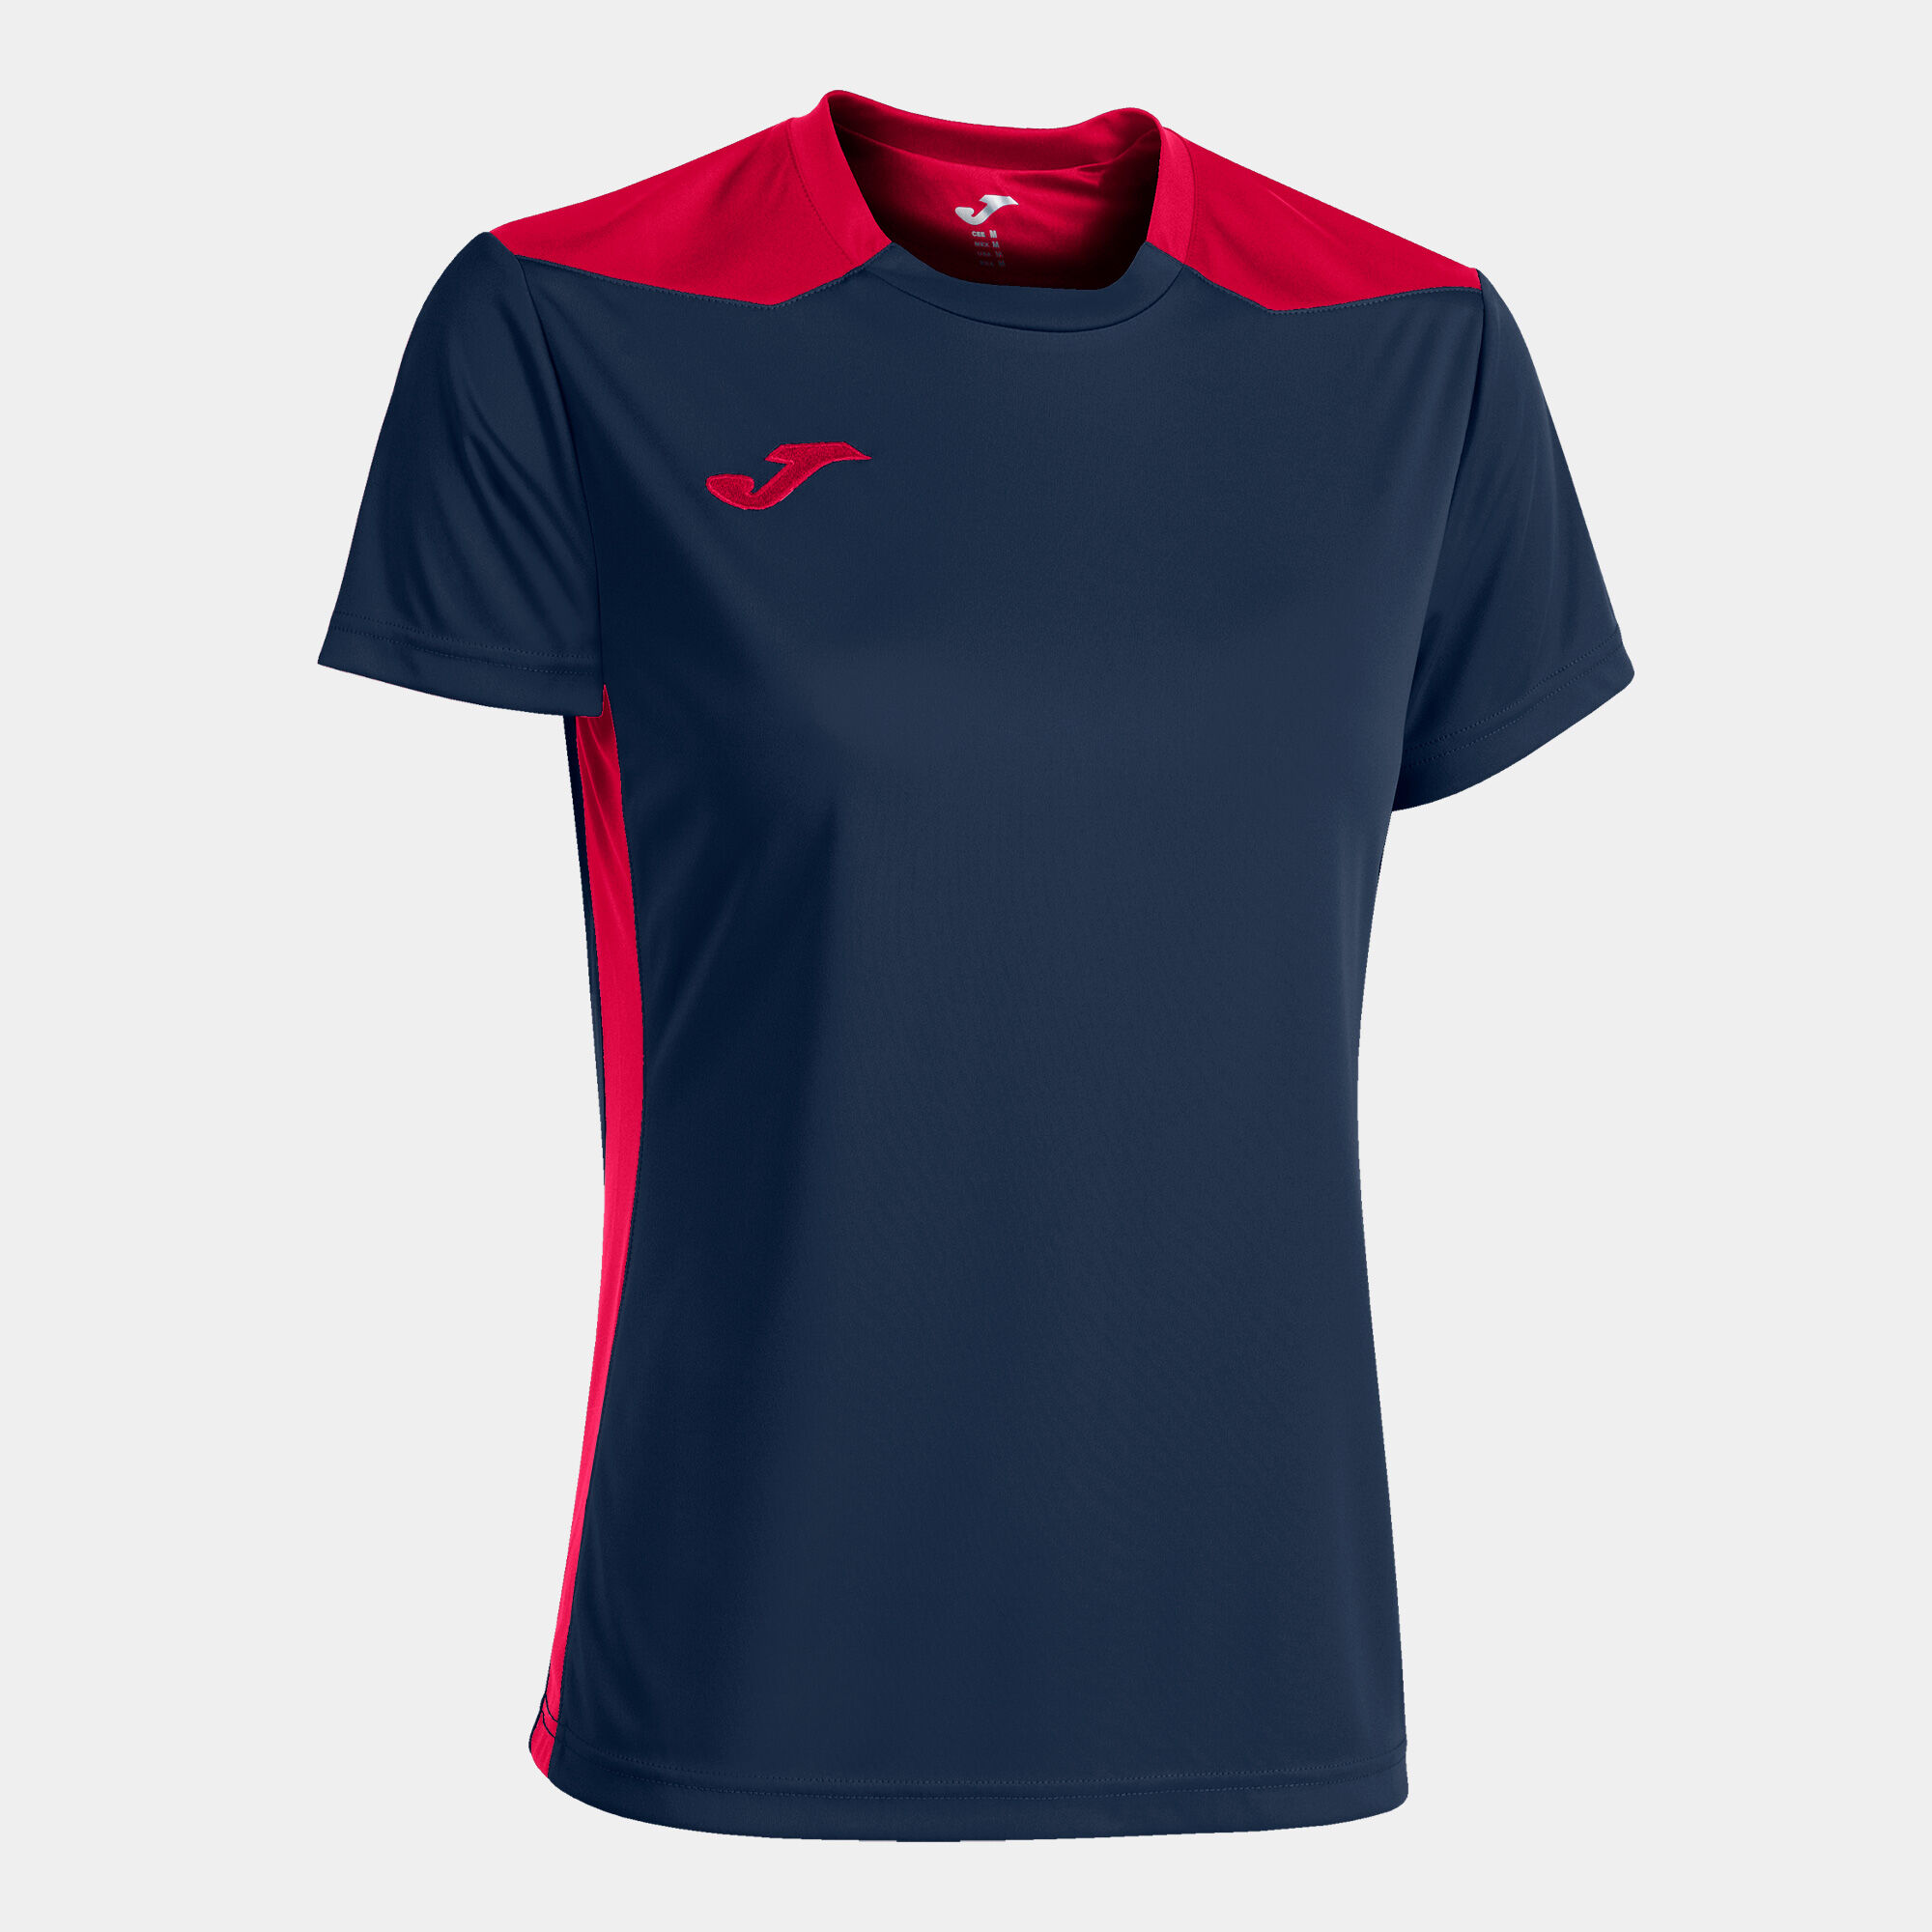 Shirt short sleeve woman Championship VI navy blue red